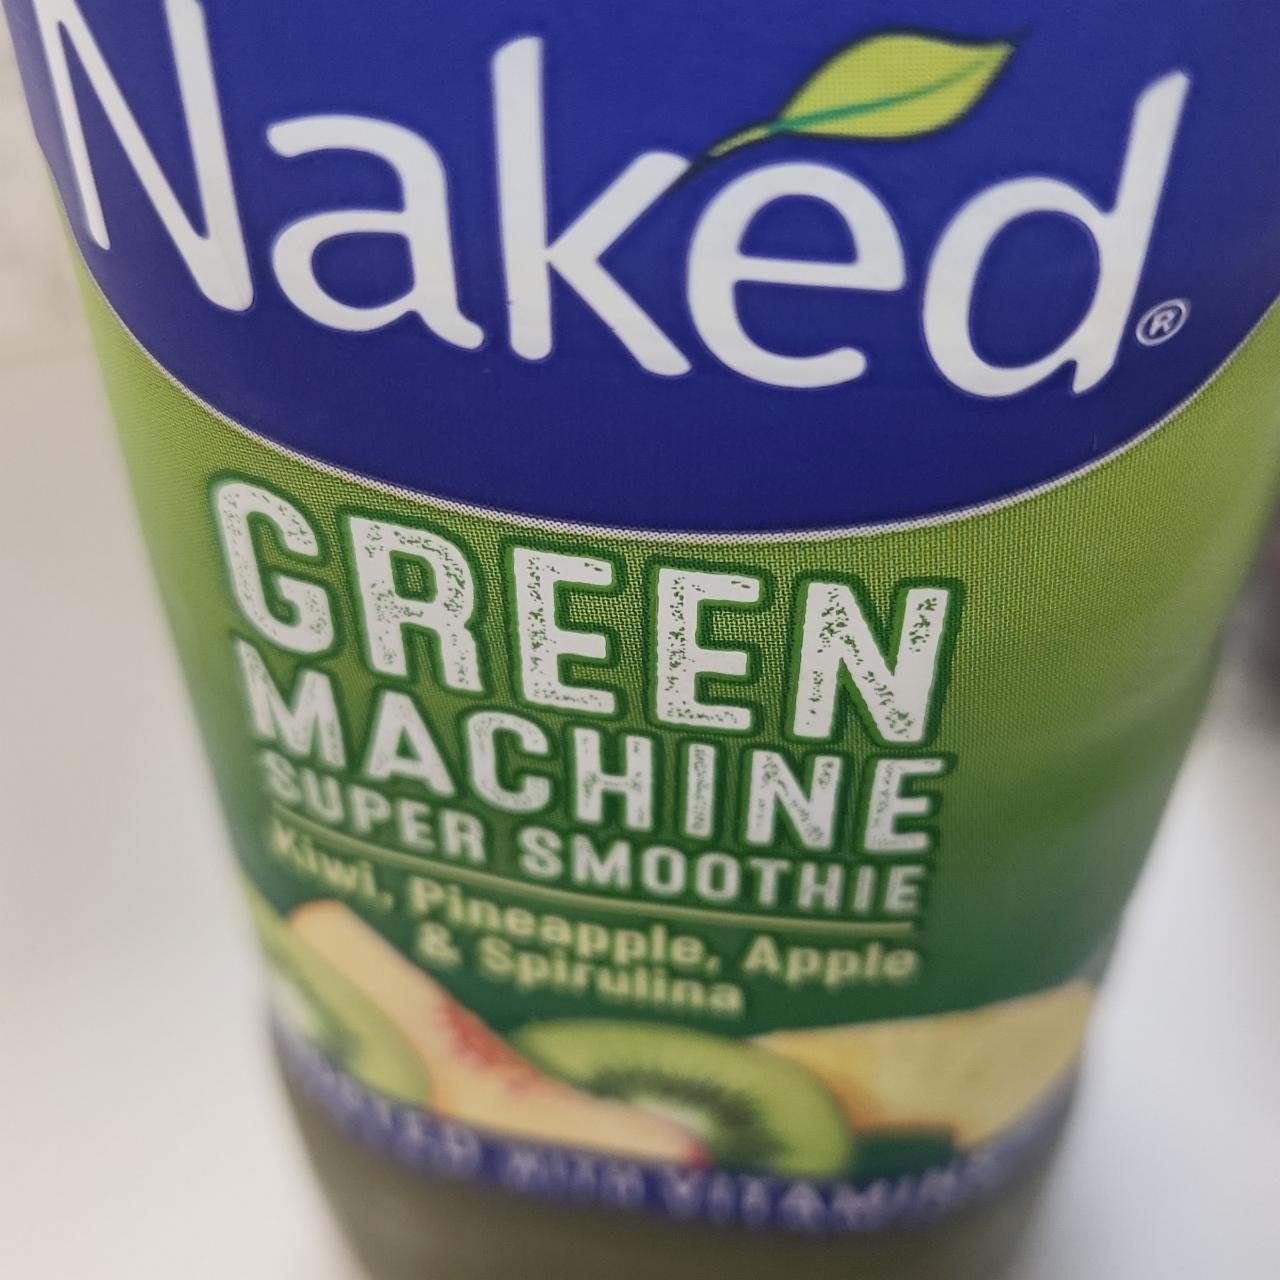 Zdjęcia - Green machine Kiwi Pineapple Apple Spirulina Naked